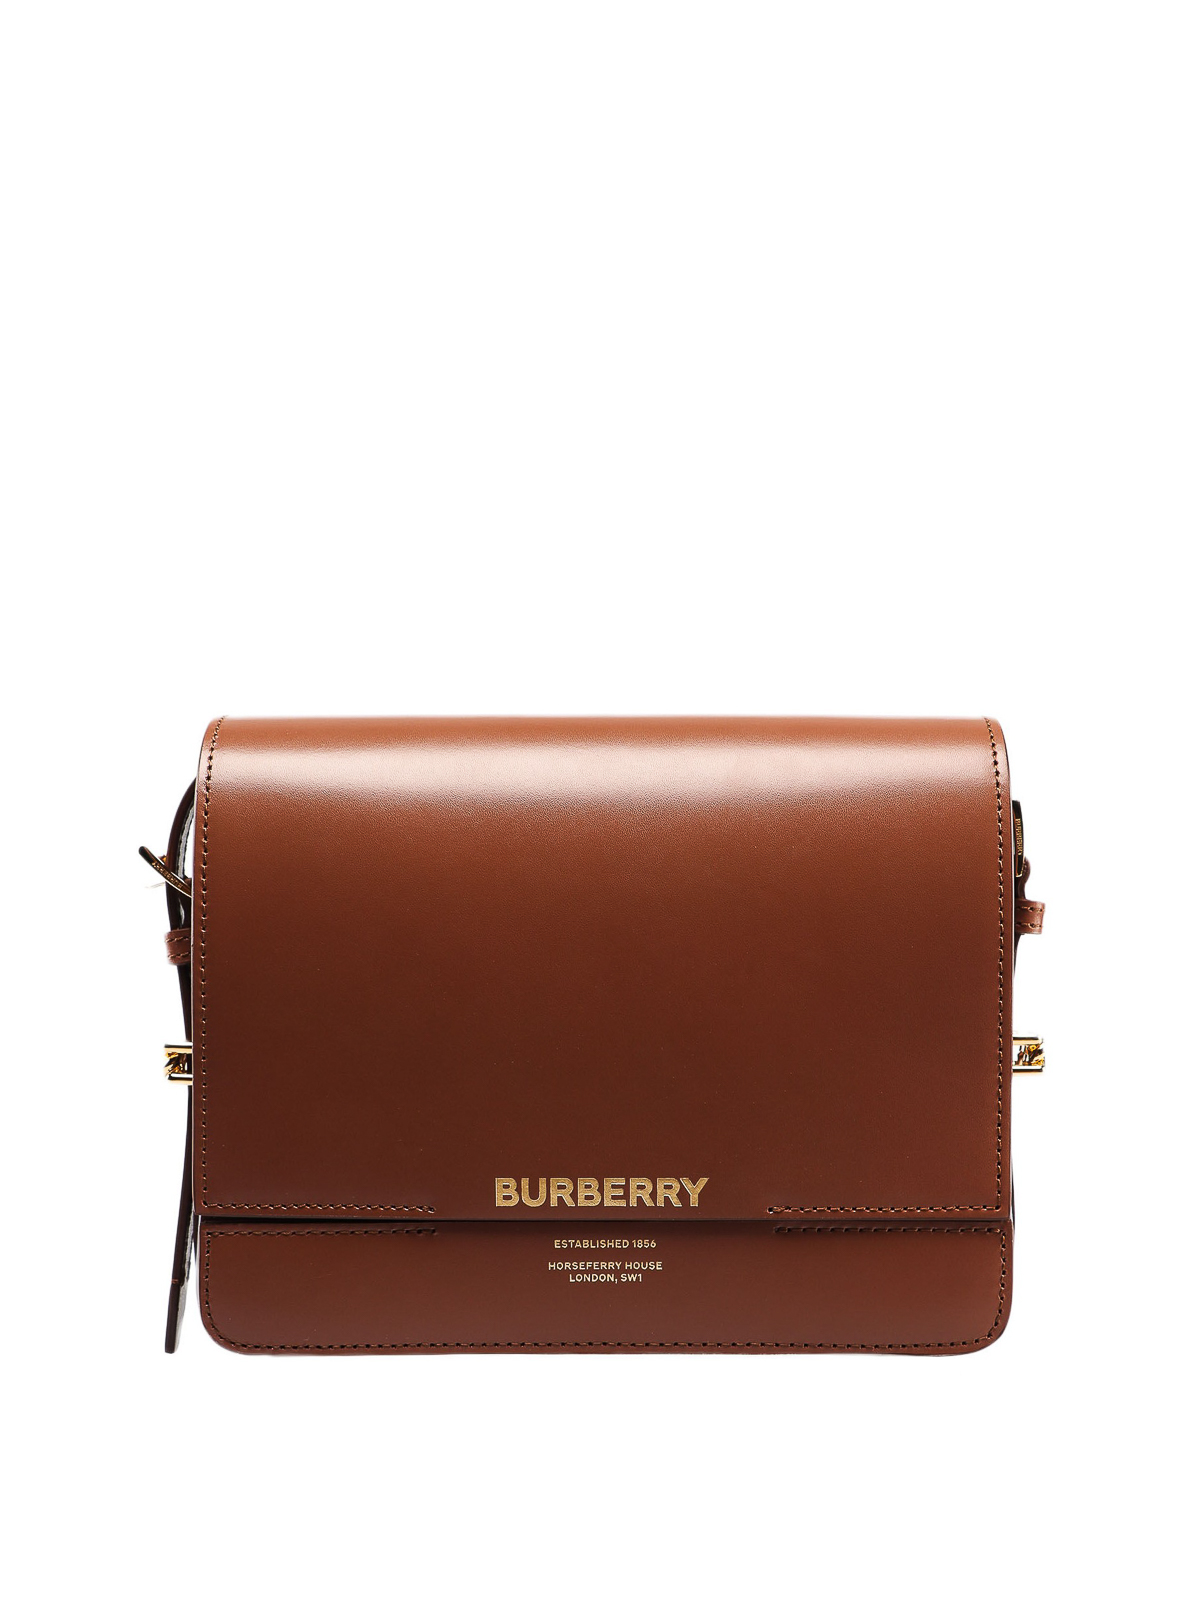 Burberry Small Grace BLACK Stripe Leather Strap Handbag Bag Black